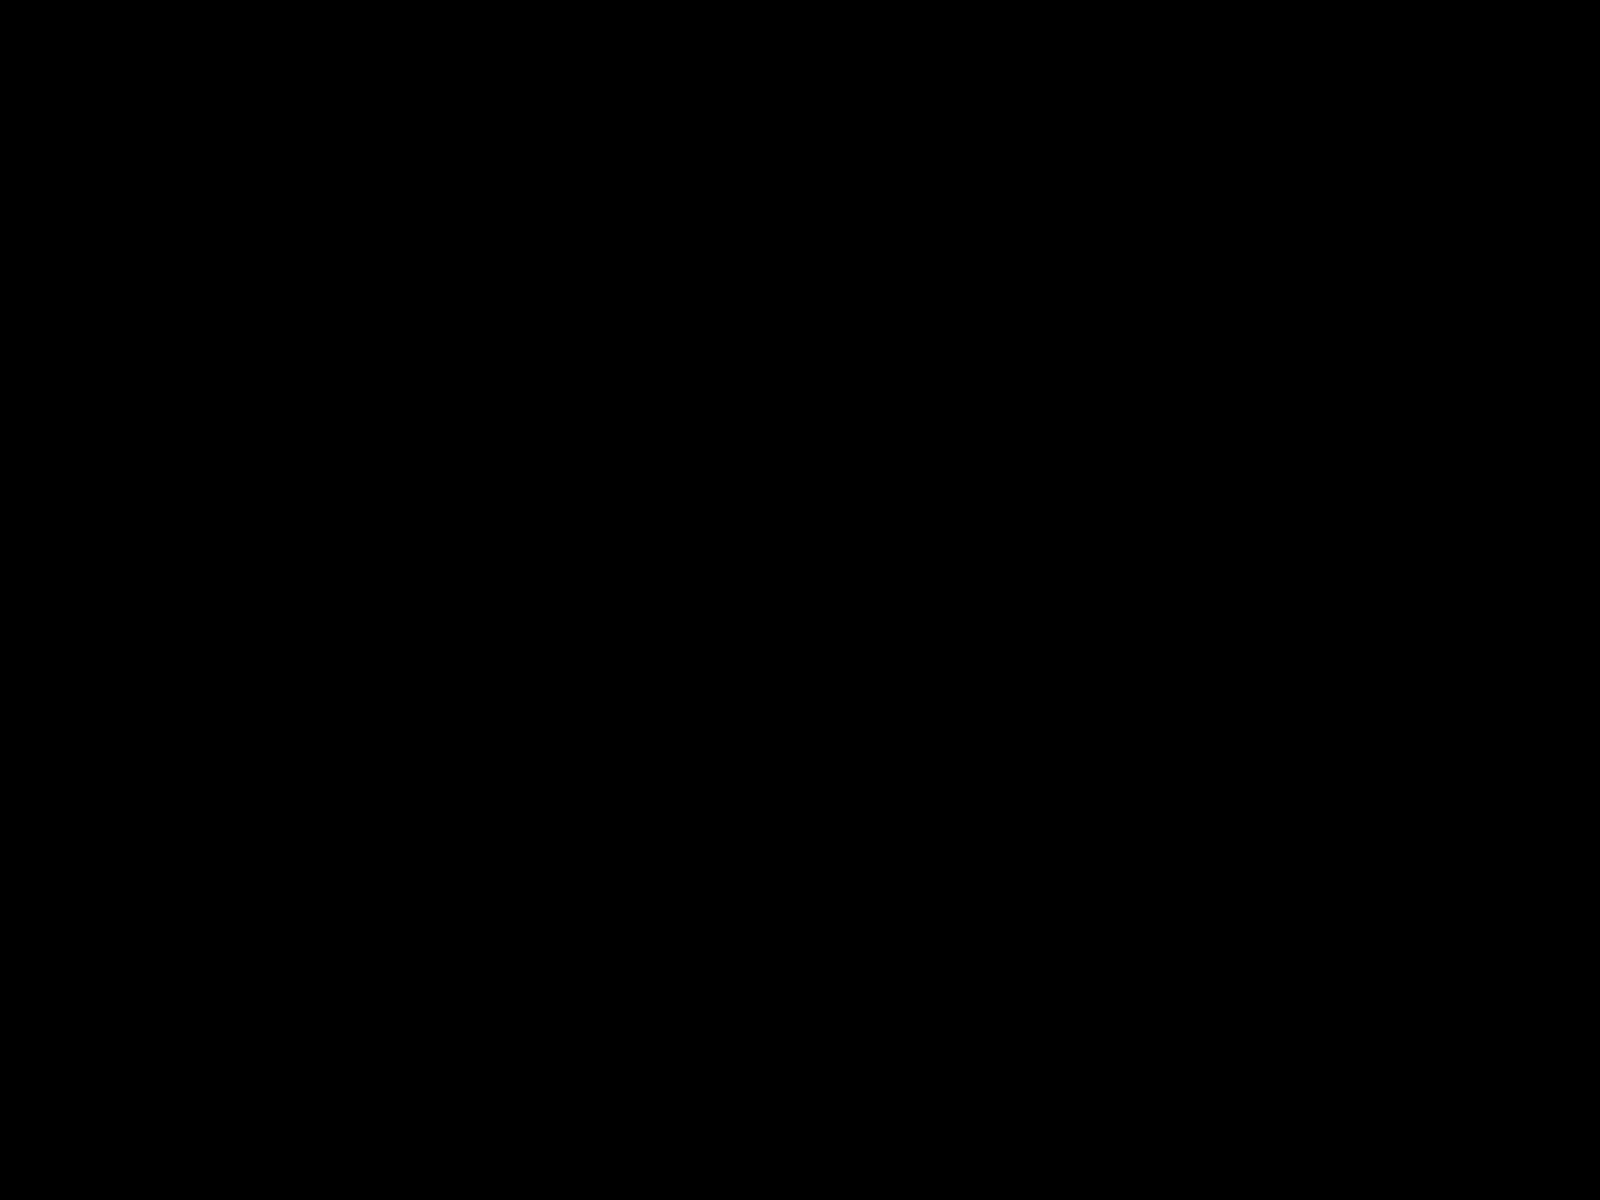 GC logo animation